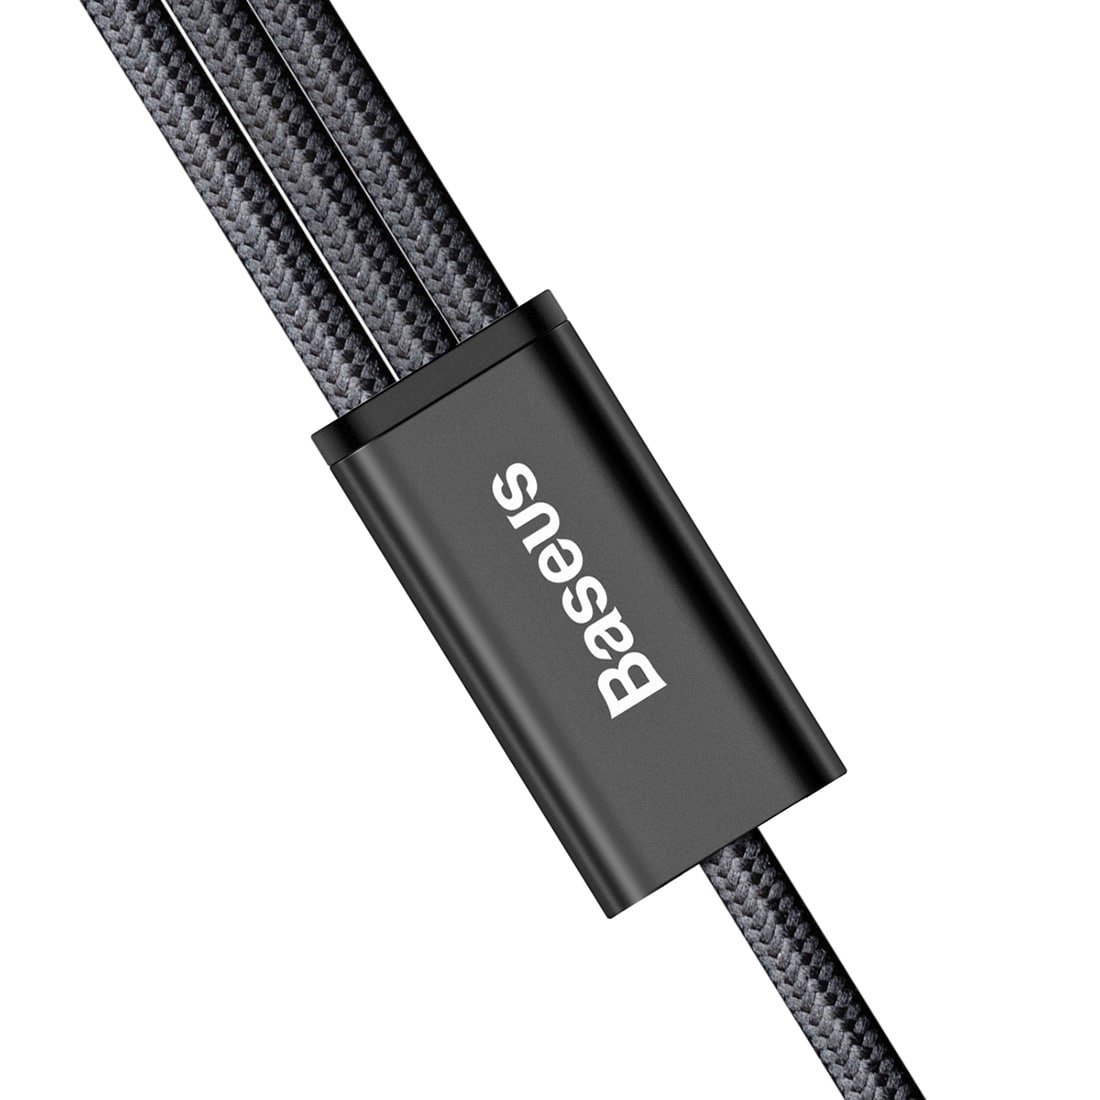 Usb-kabel 3-i-1 - 2 iPhone ladekabler + 1 Micro usb